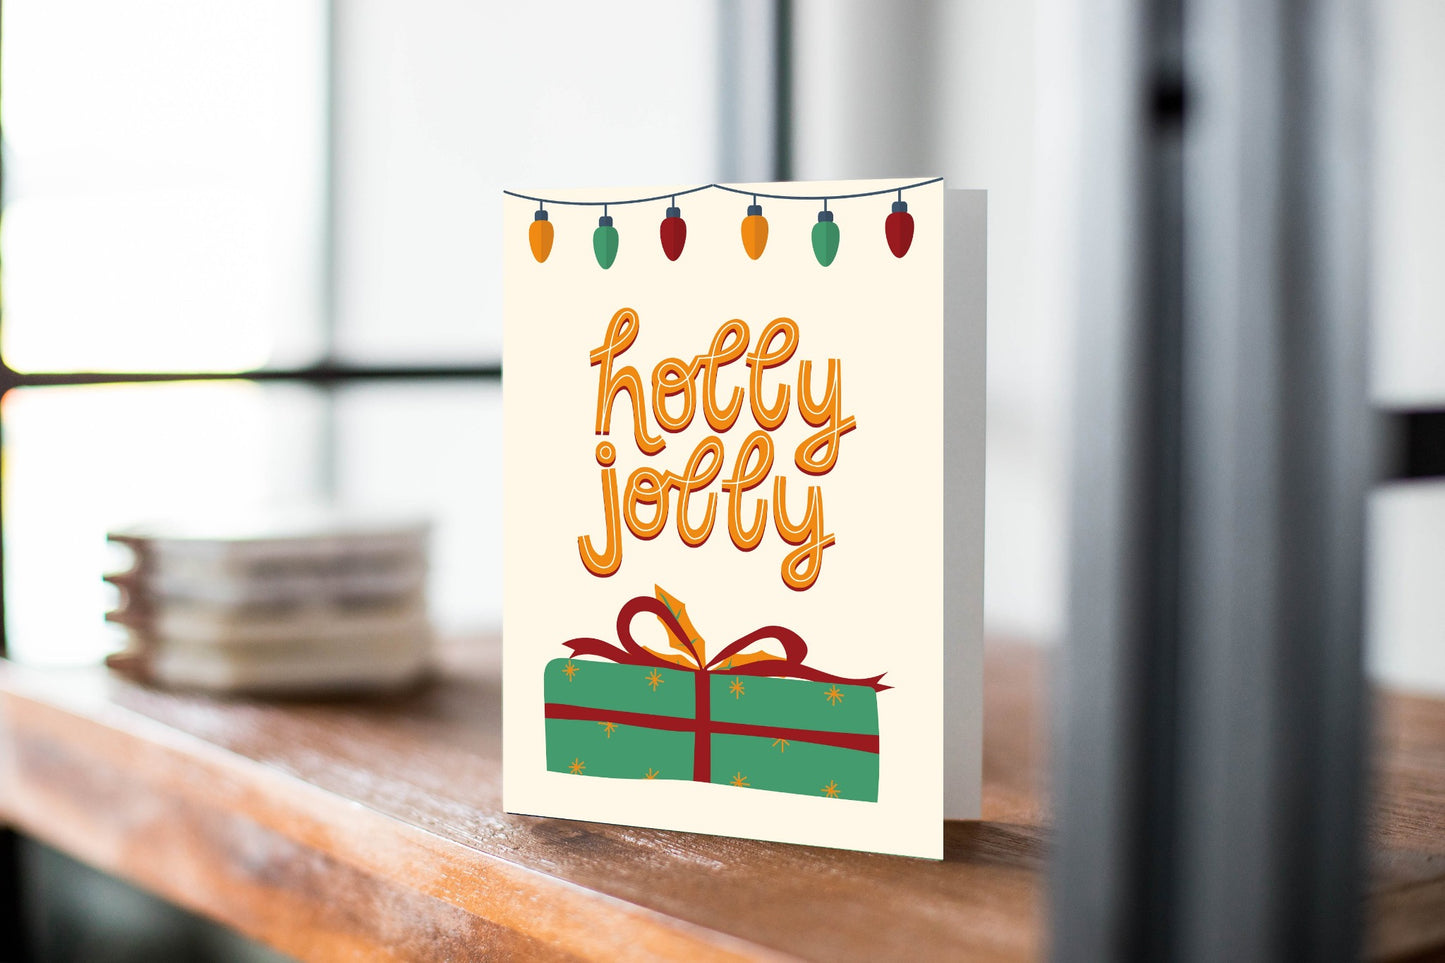 Holly Jolly Christmas Greeting Card.